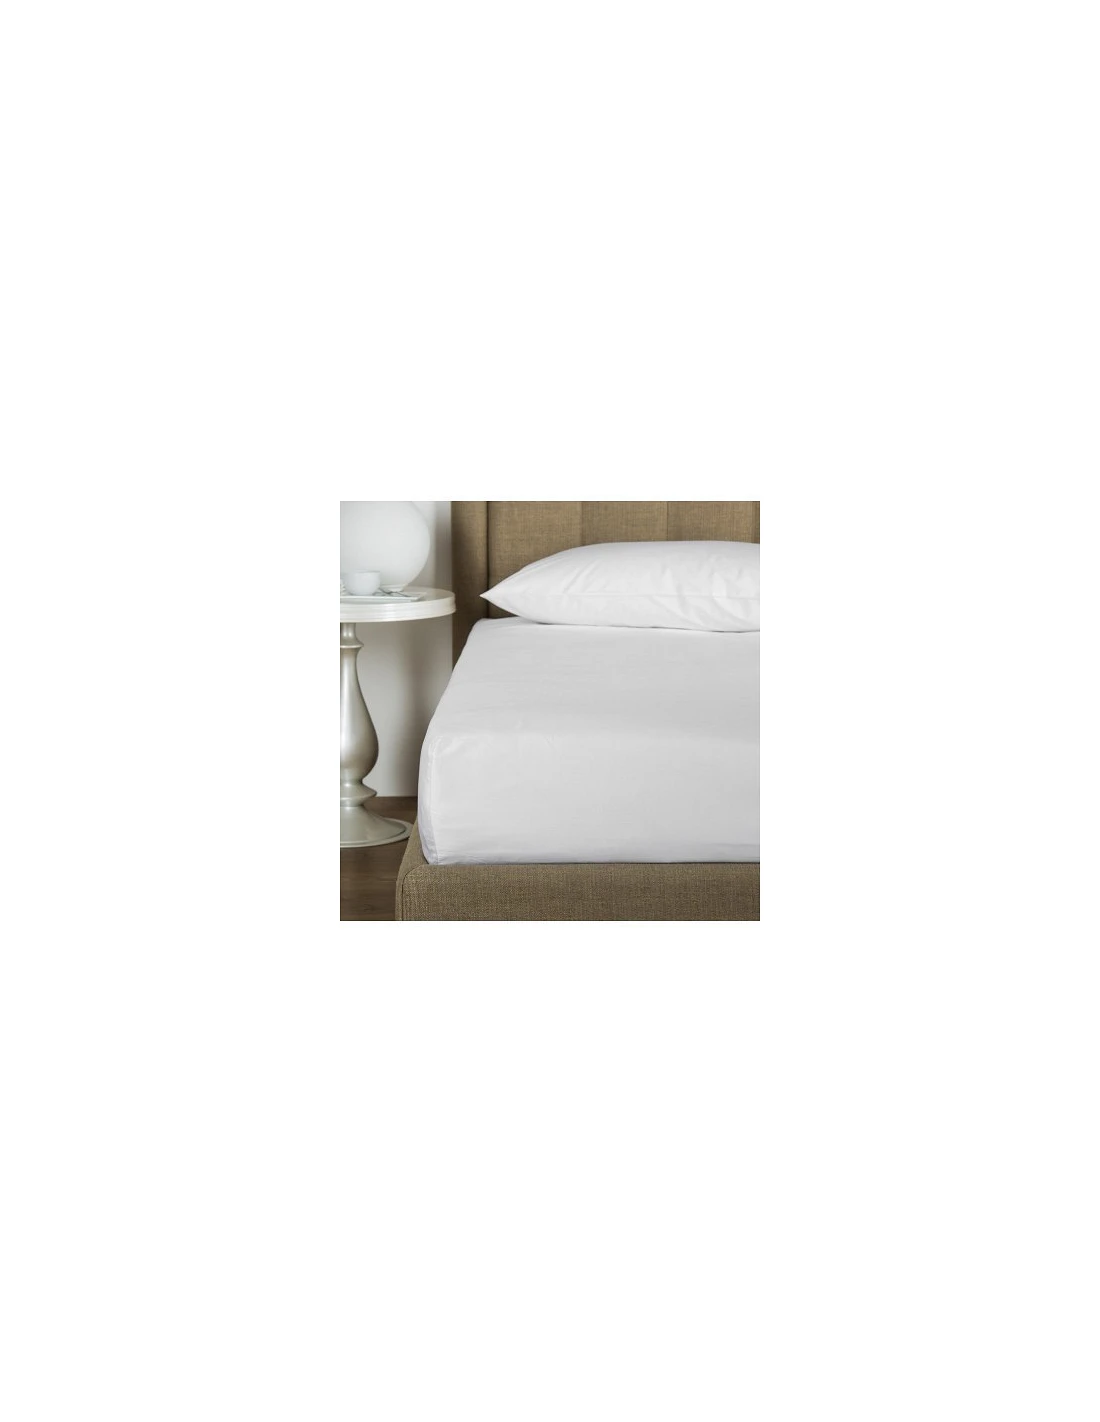 Sabana bajera ajustable | bajera blanca algodón percal | bajera cama 105